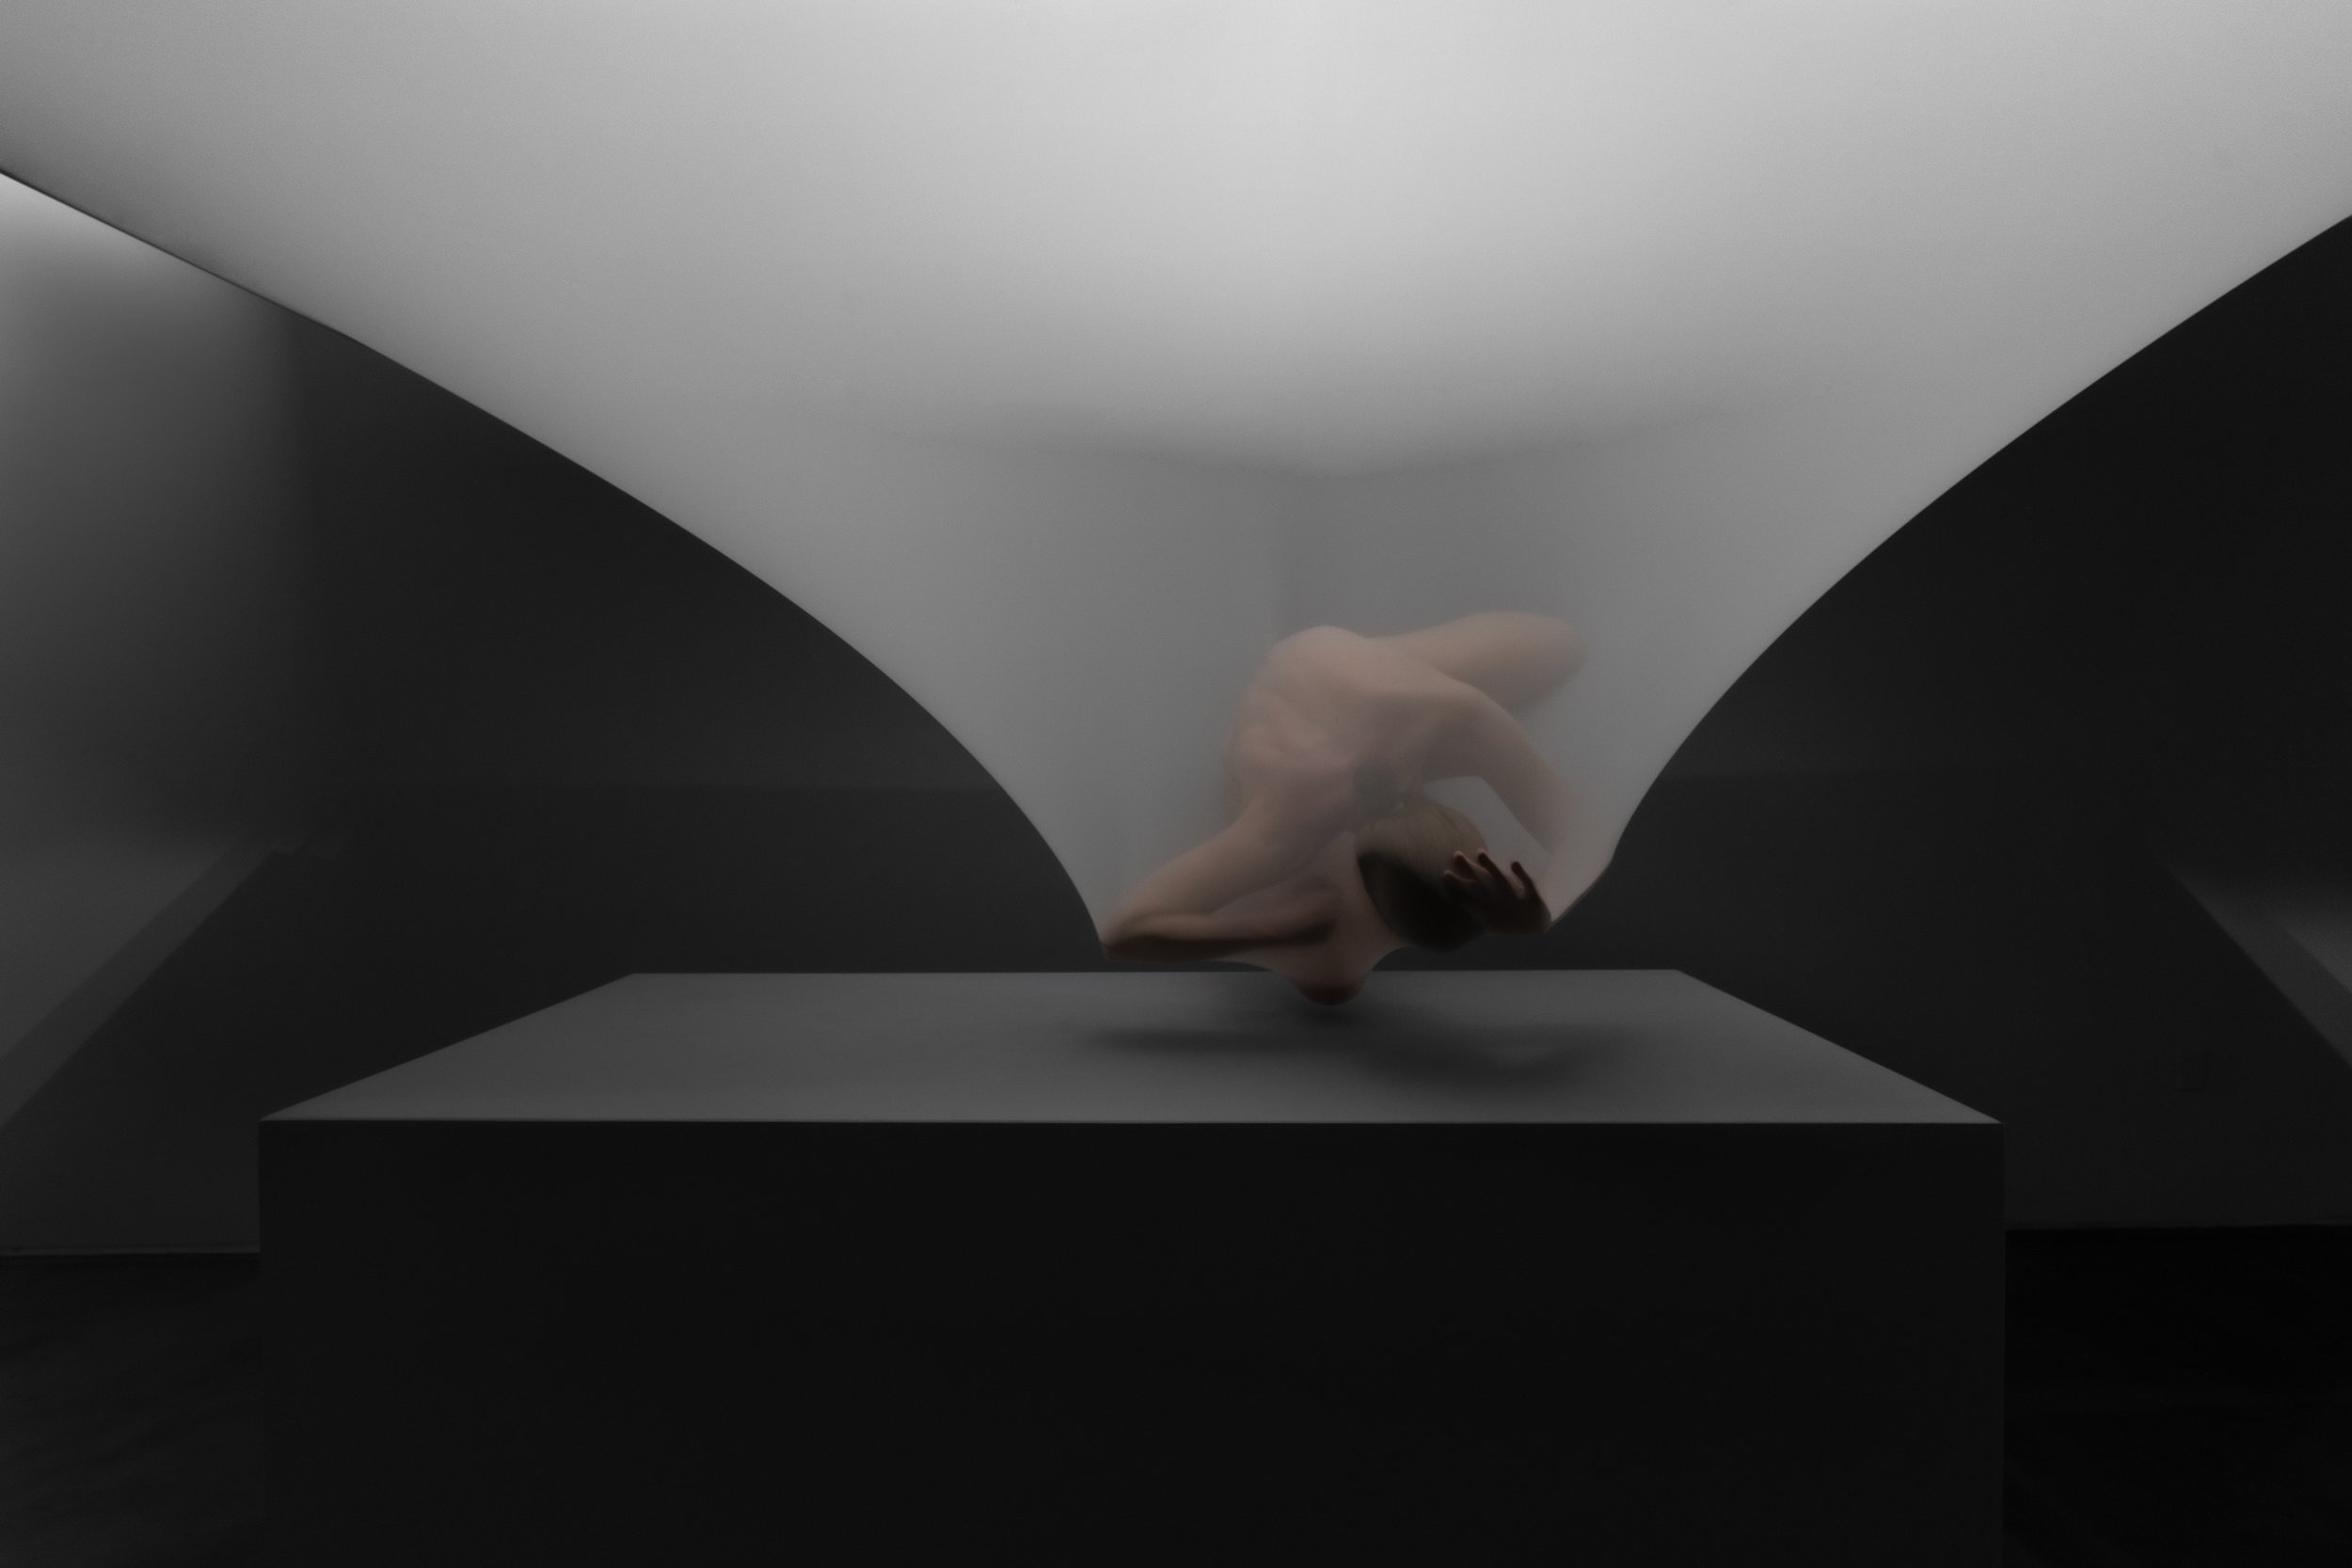 7.Malin-Bülow-Levitation#2-Piero-Atchugarry-Gallery-Pablo-Atchugarry-Foundation.jpg